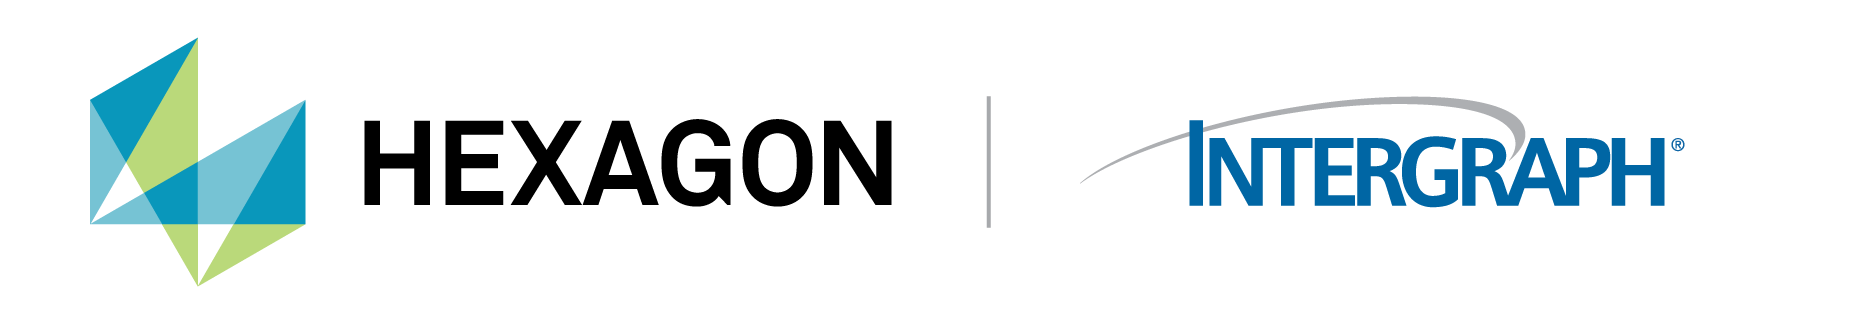 intergraph logo.gif